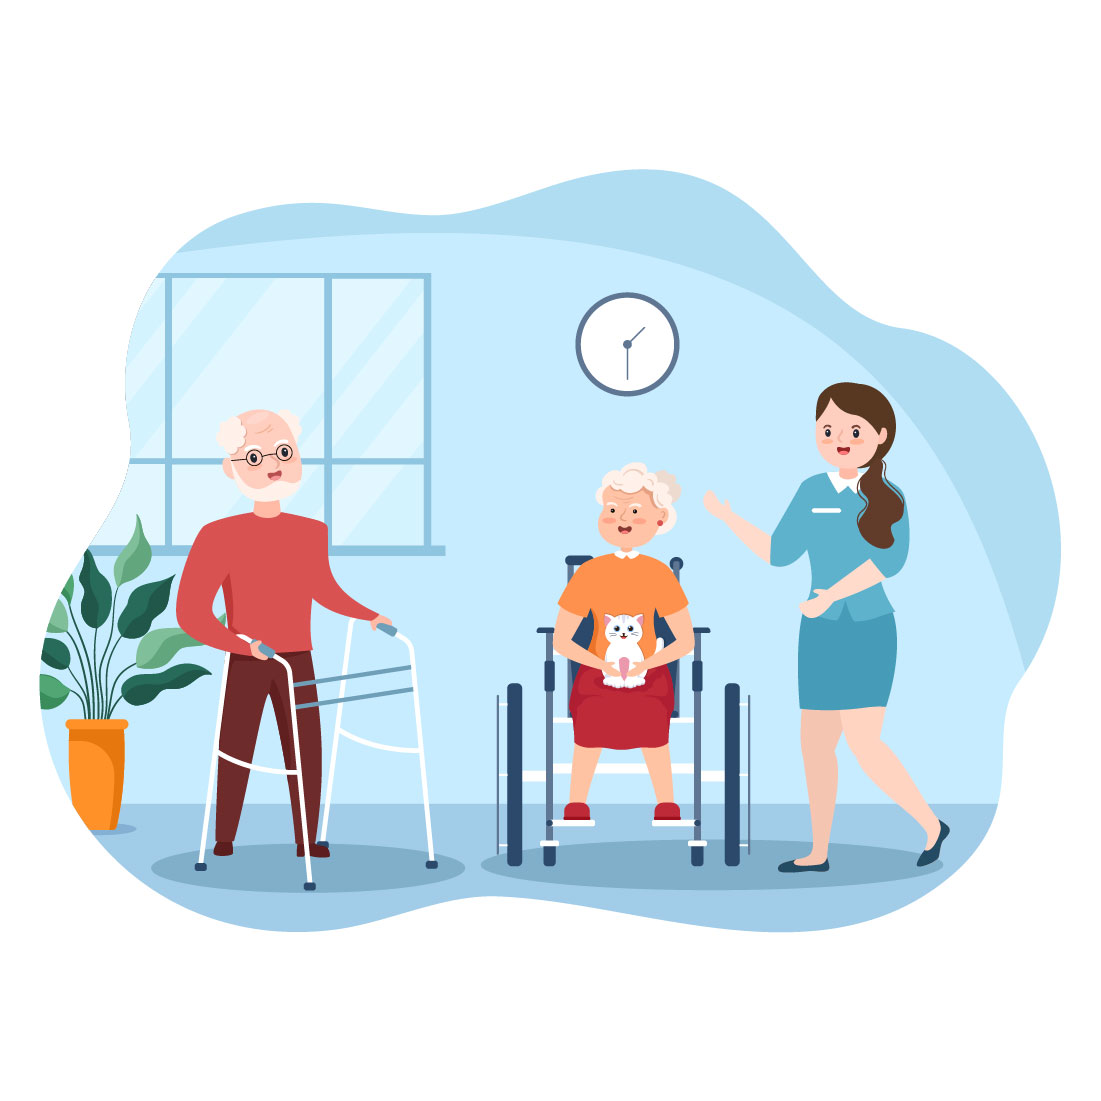 13 Elderly Care Services Illustration preview image.